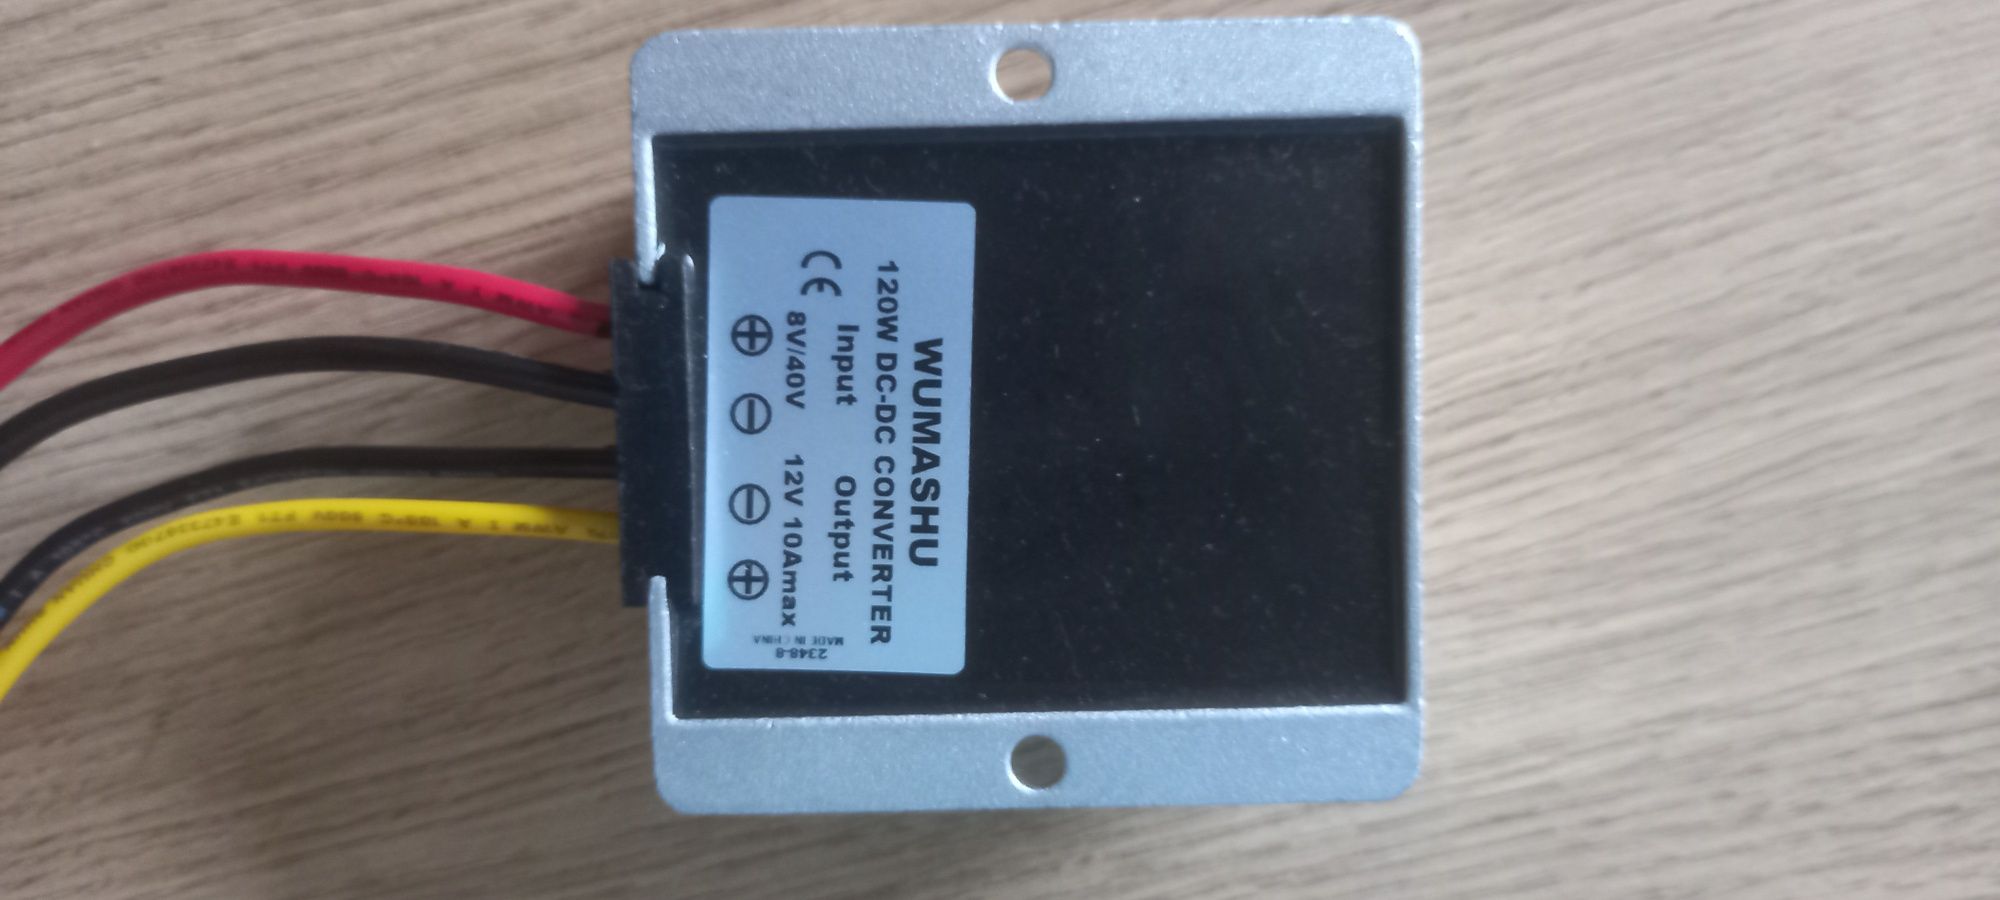 Convertor 8-40v - 13.8v (dc to dc charger)